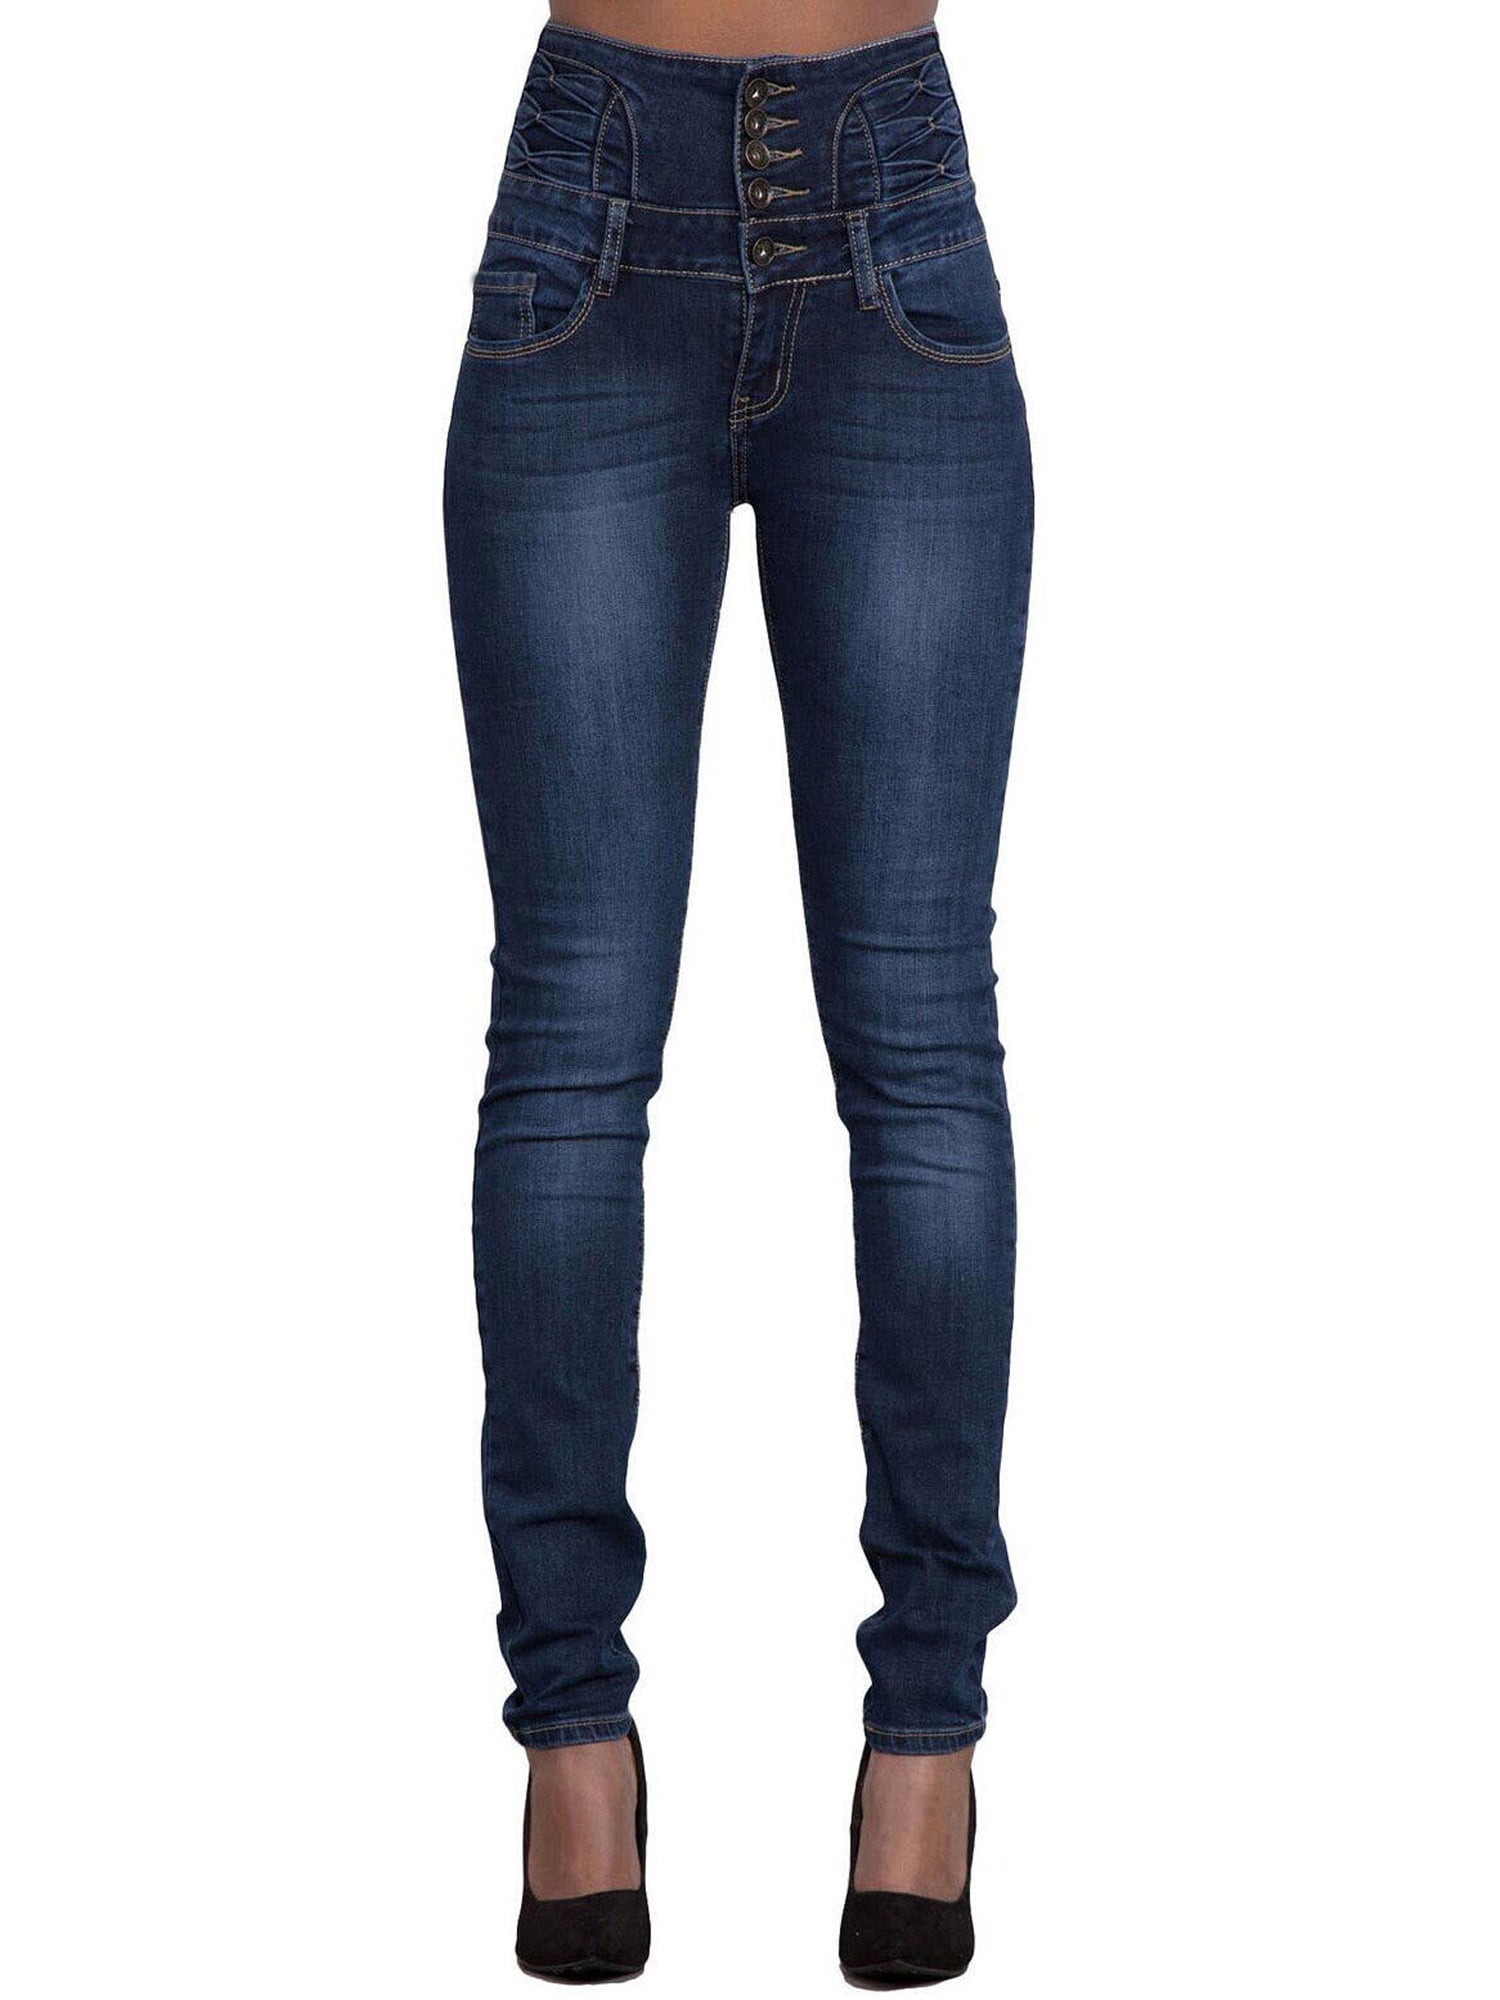 Skinny Denim Pencil Leggings High New Trousers Stretchy Pants Jeans Waist Women 